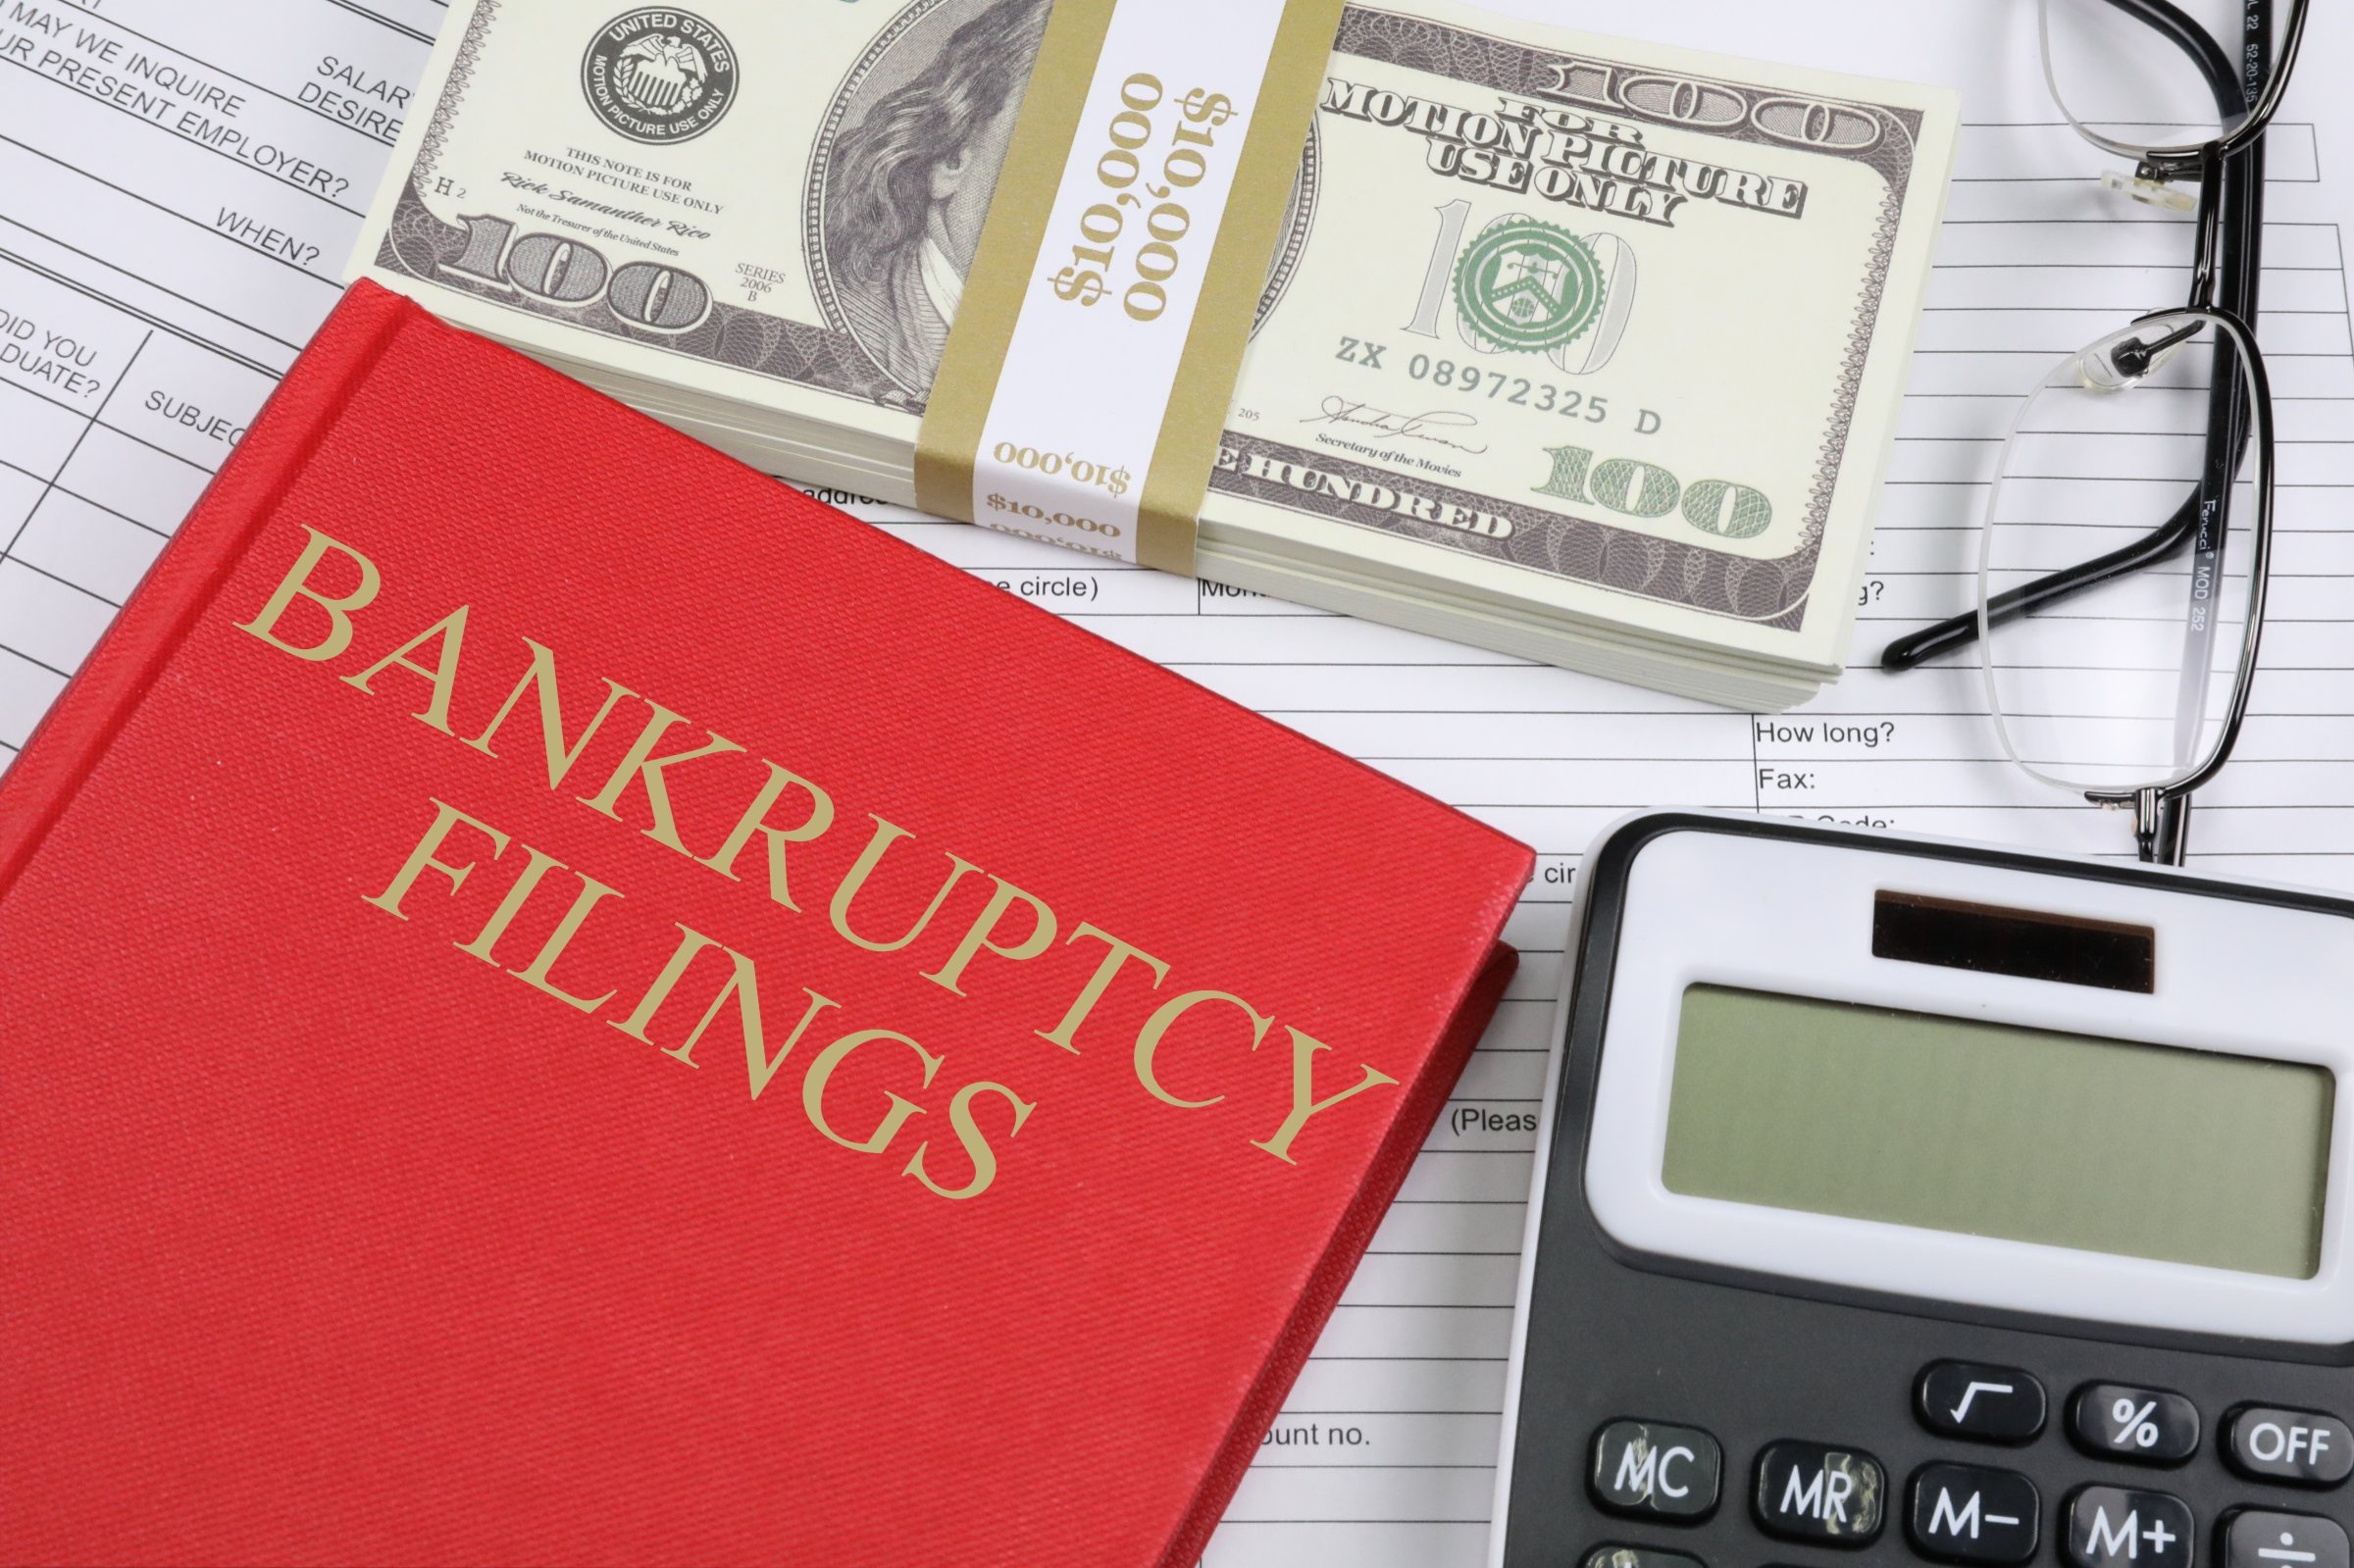 bankruptcy filings